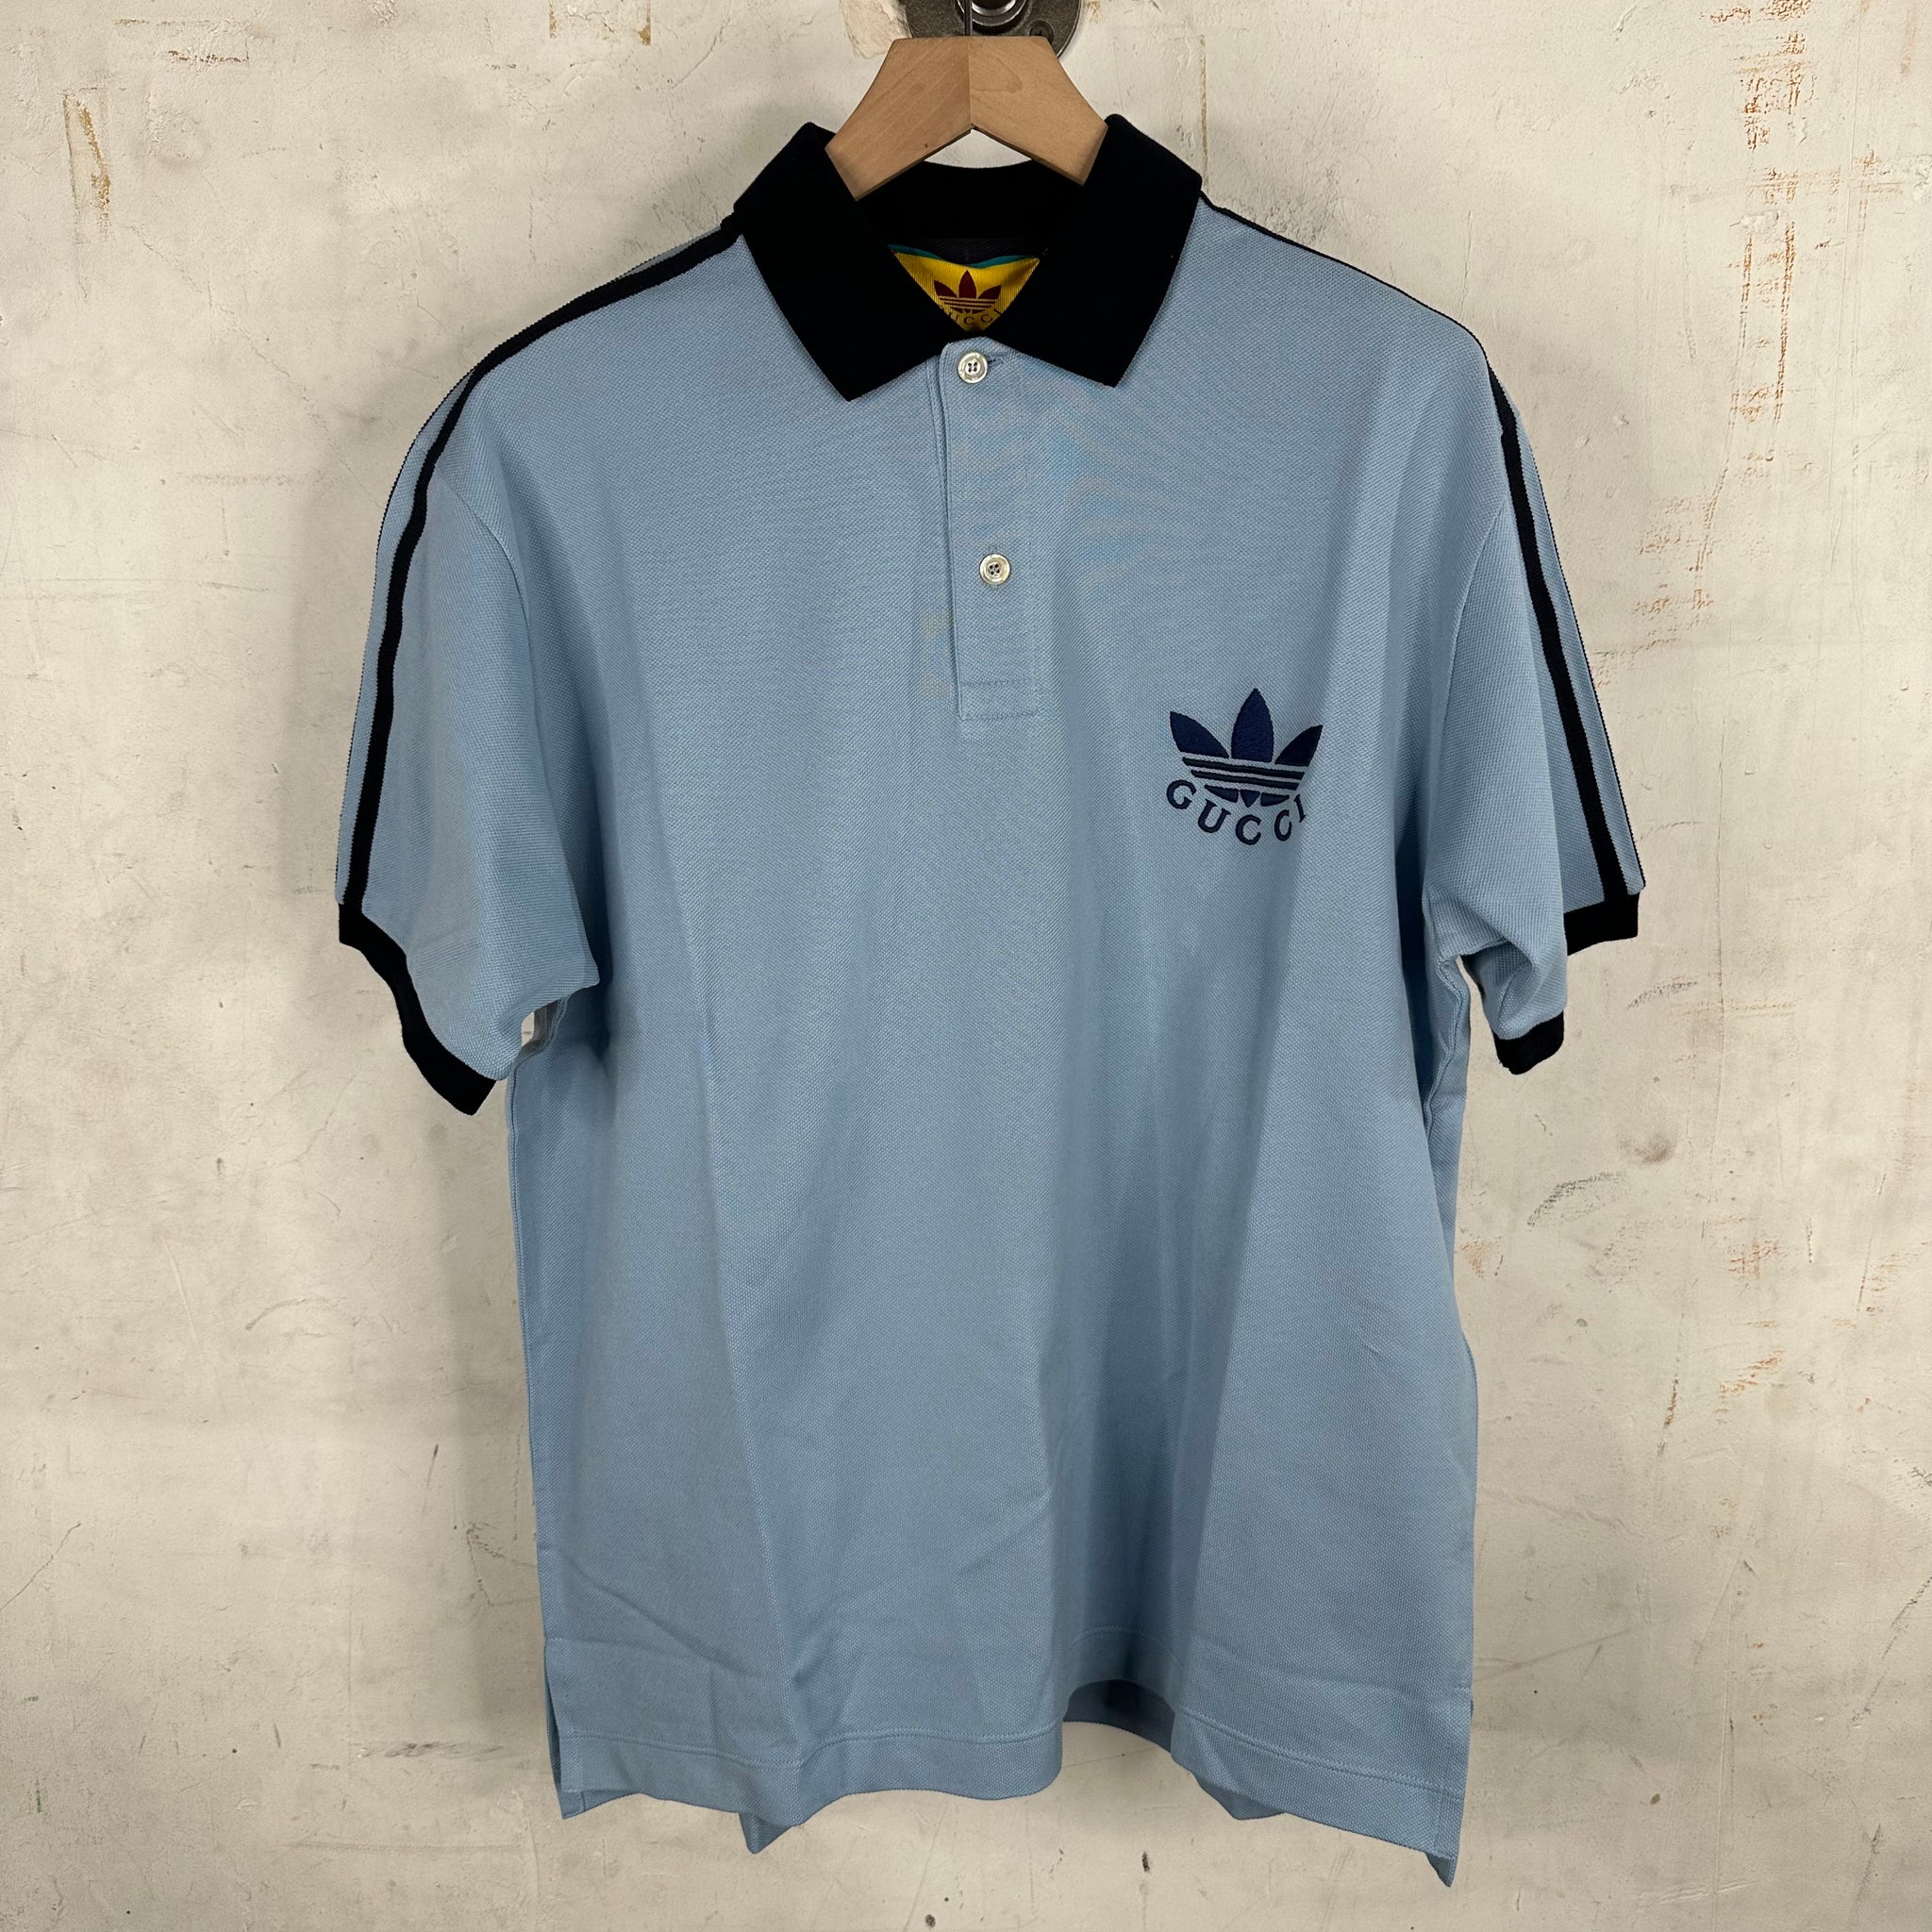 Gucci x Adidas Polo Shirt